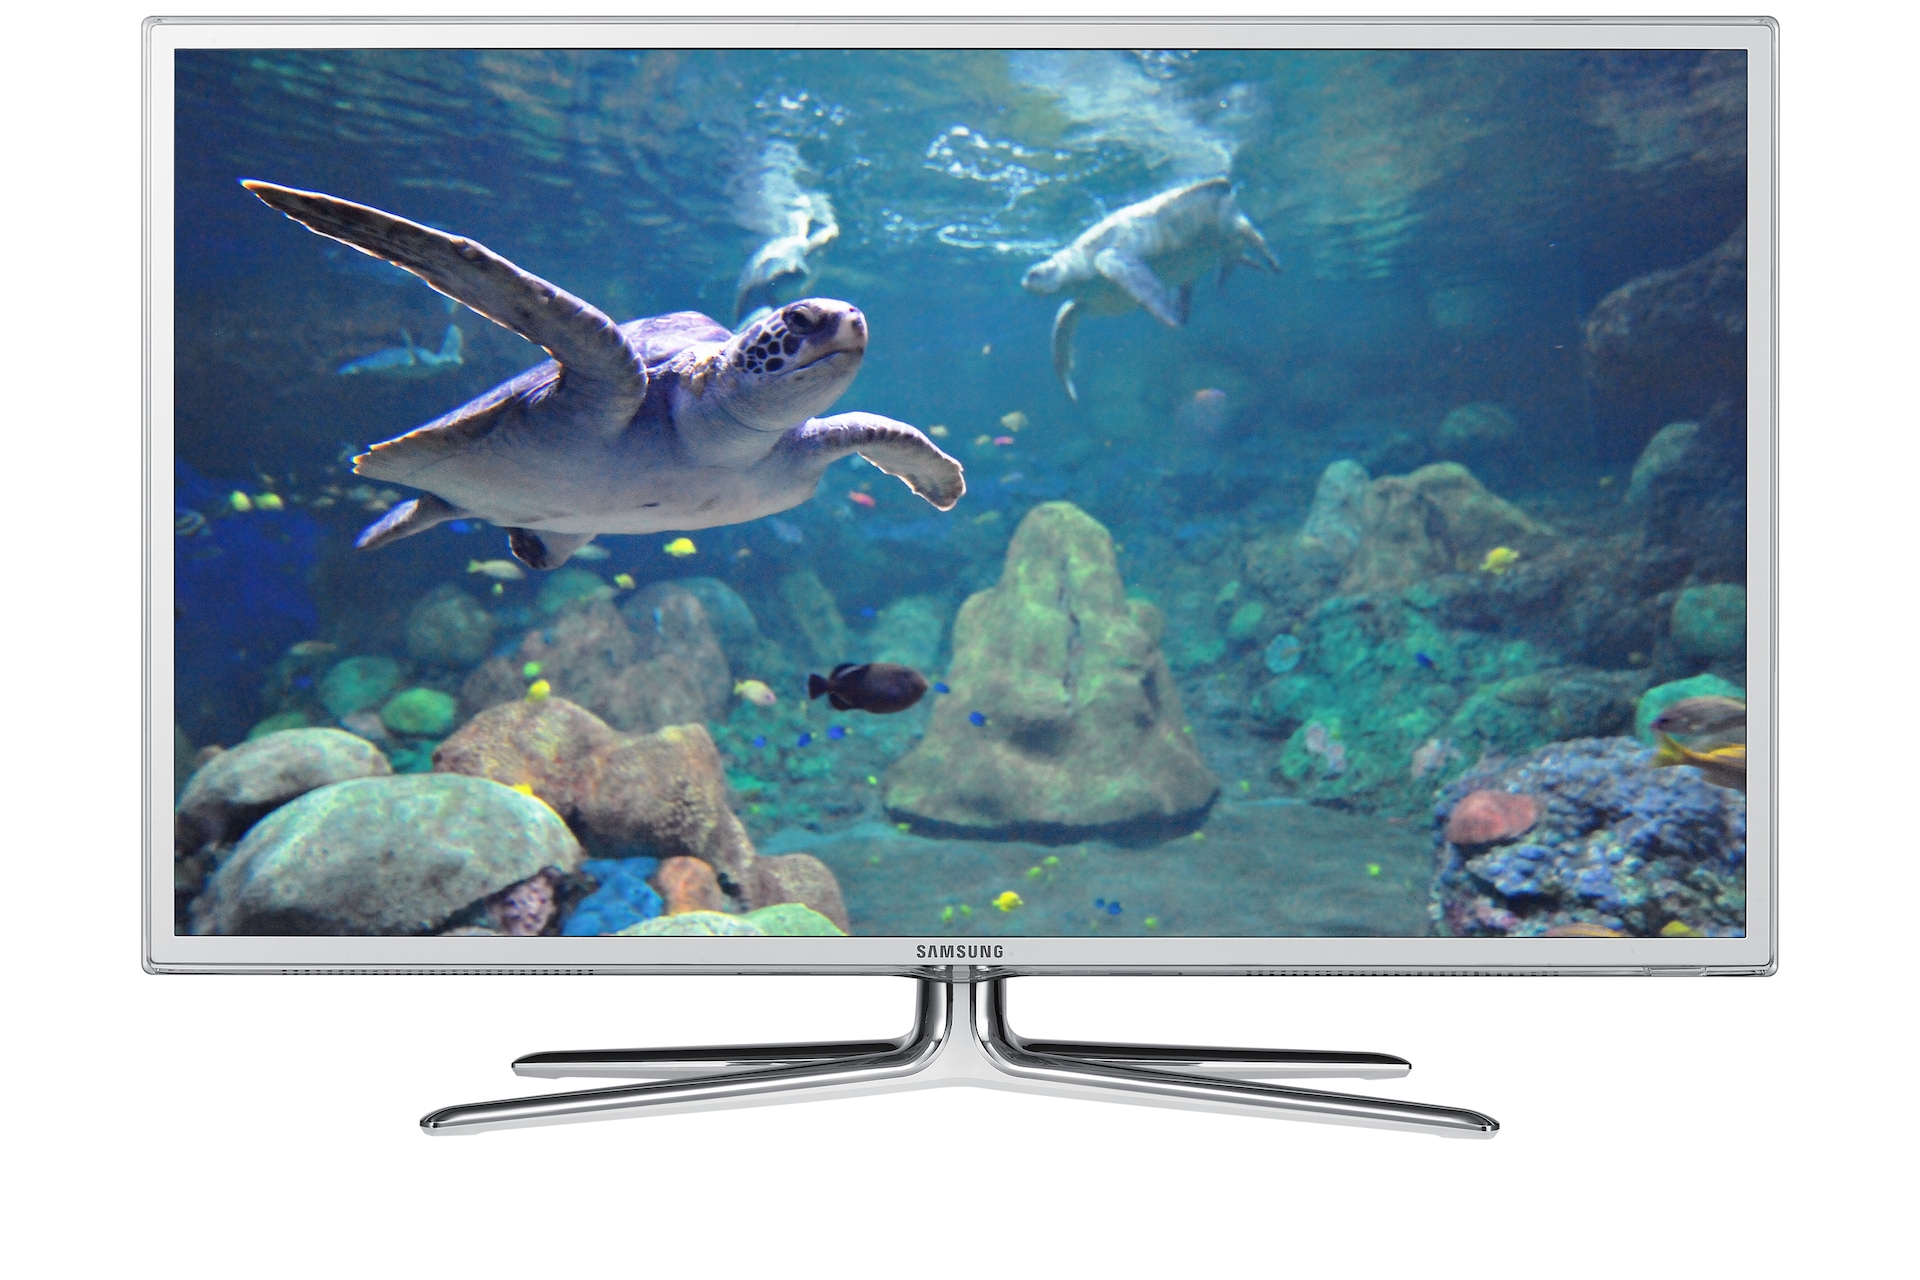 blok Afrekenen overspringen UE46D6510 LED-TV 46" | Samsung Service NL